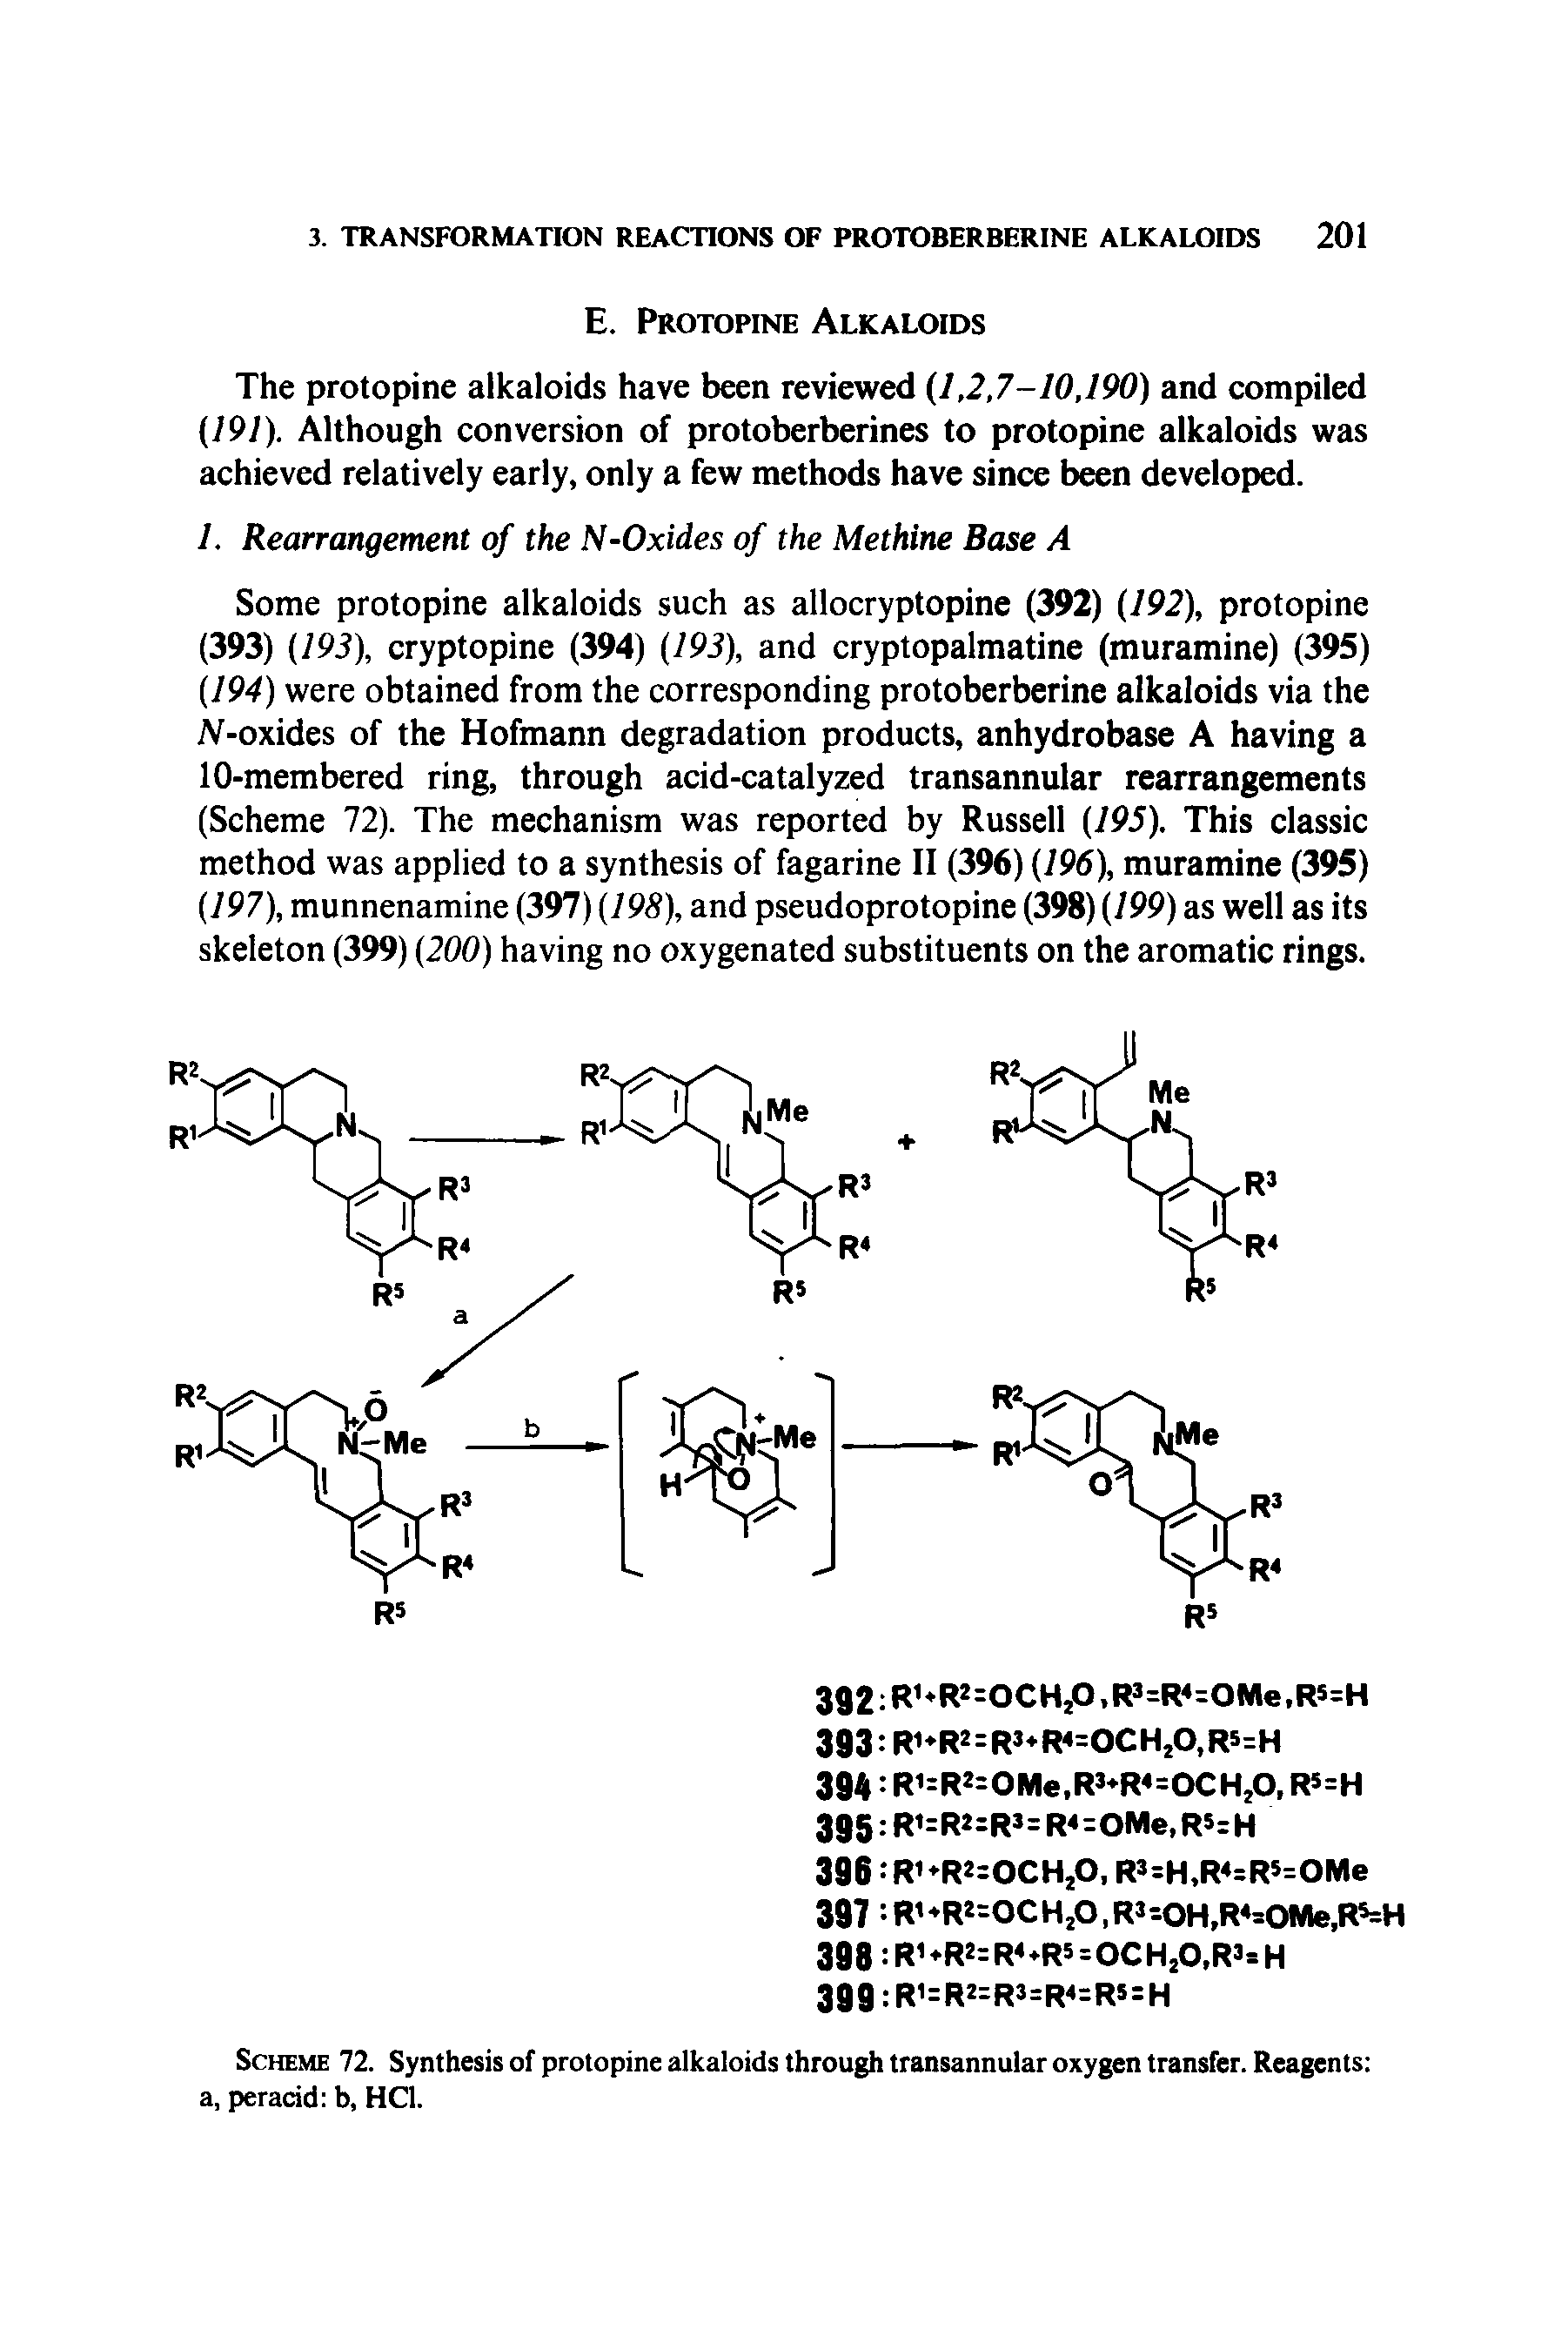 Scheme 72. Synthesis of protopine alkaloids through transannular oxygen transfer. Reagents a, peracid b, HC1.